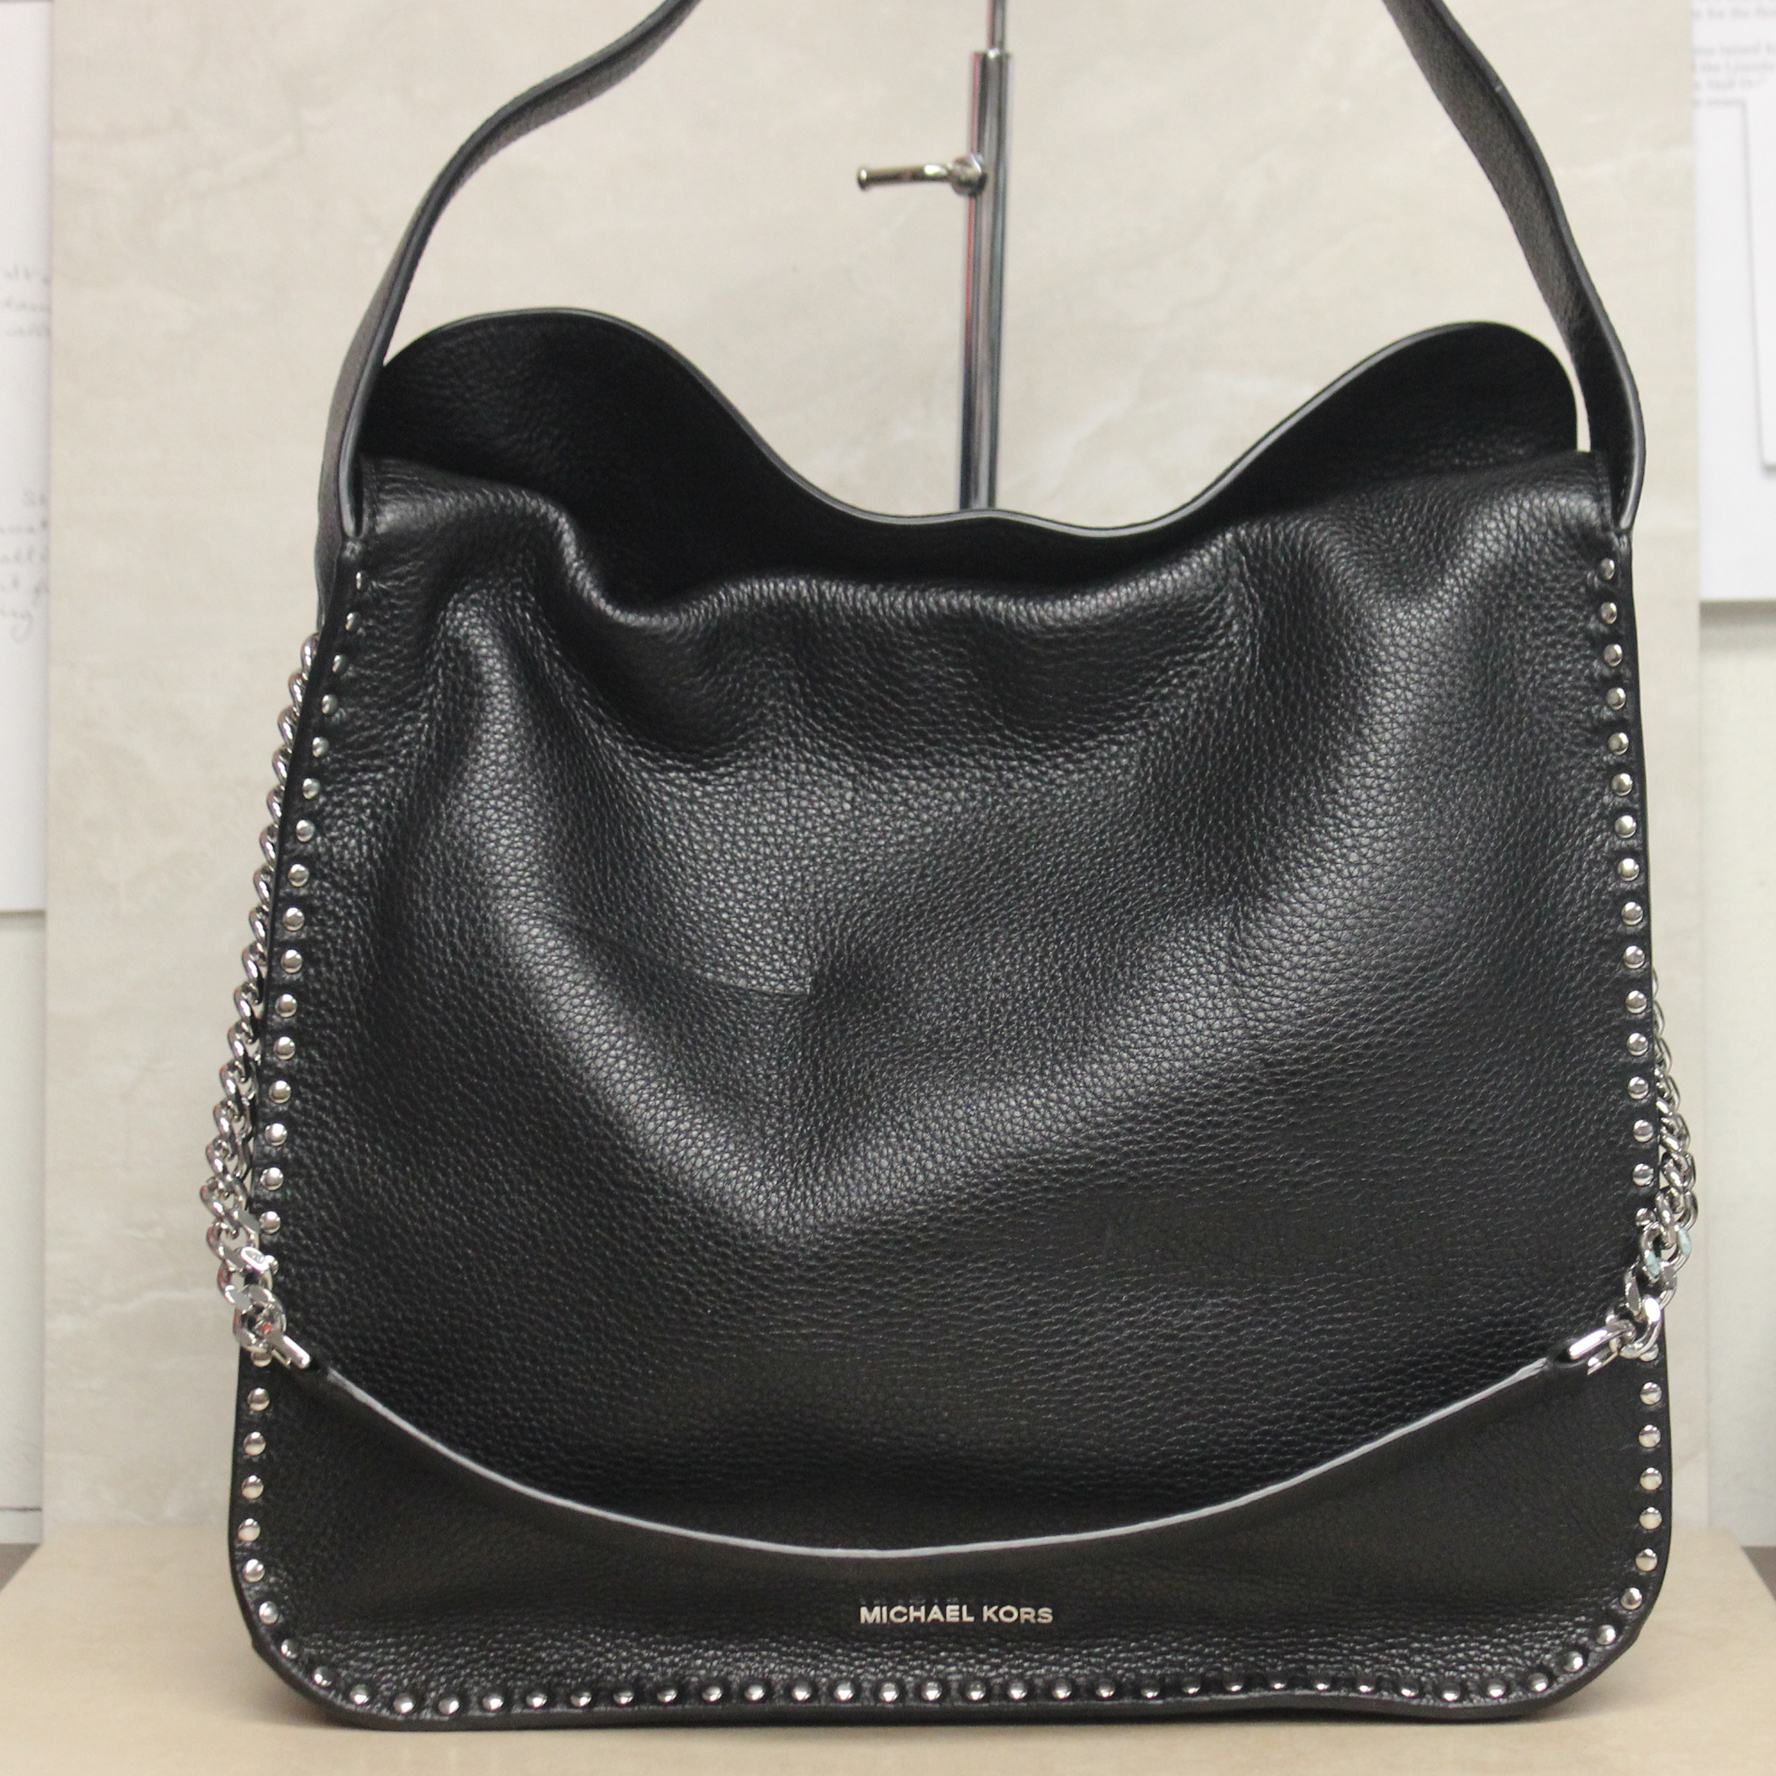 michael kors soft leather handbag